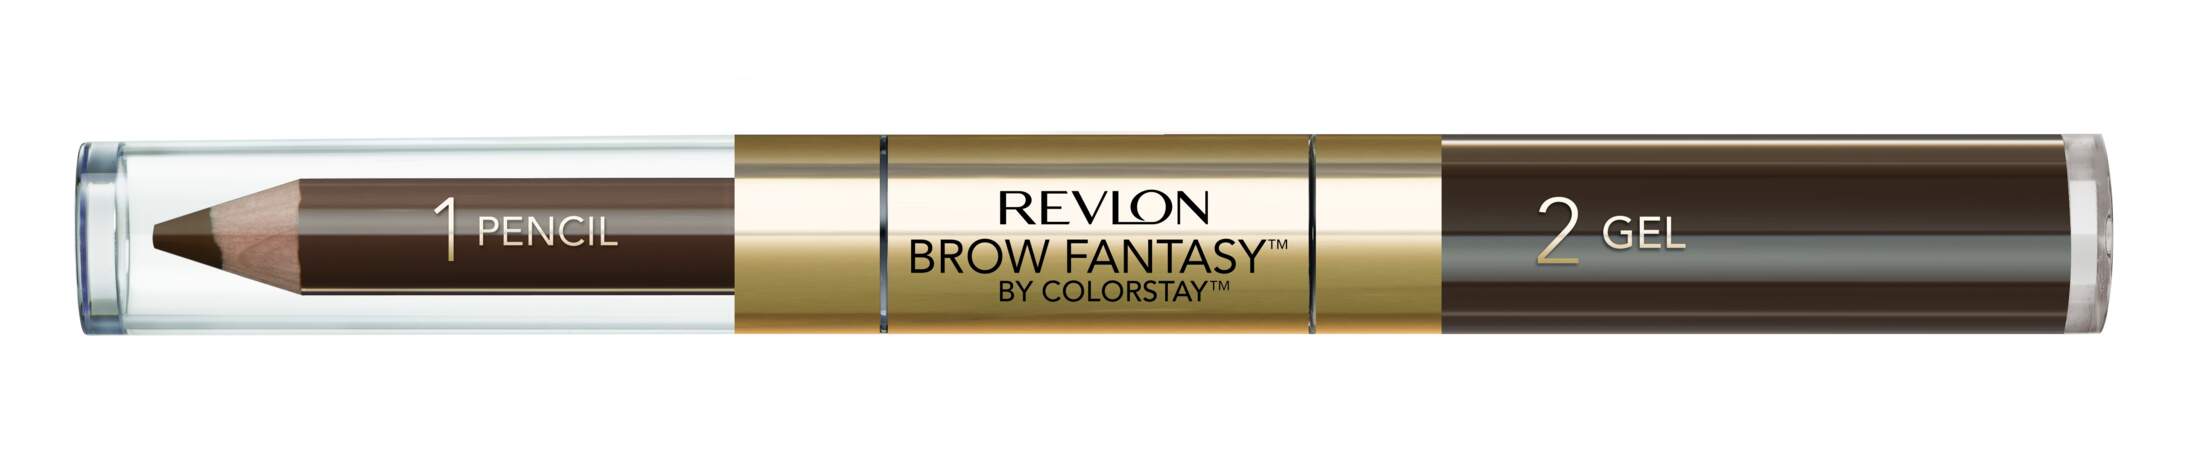 Brow Fantasy, Revlon, 10,90 €